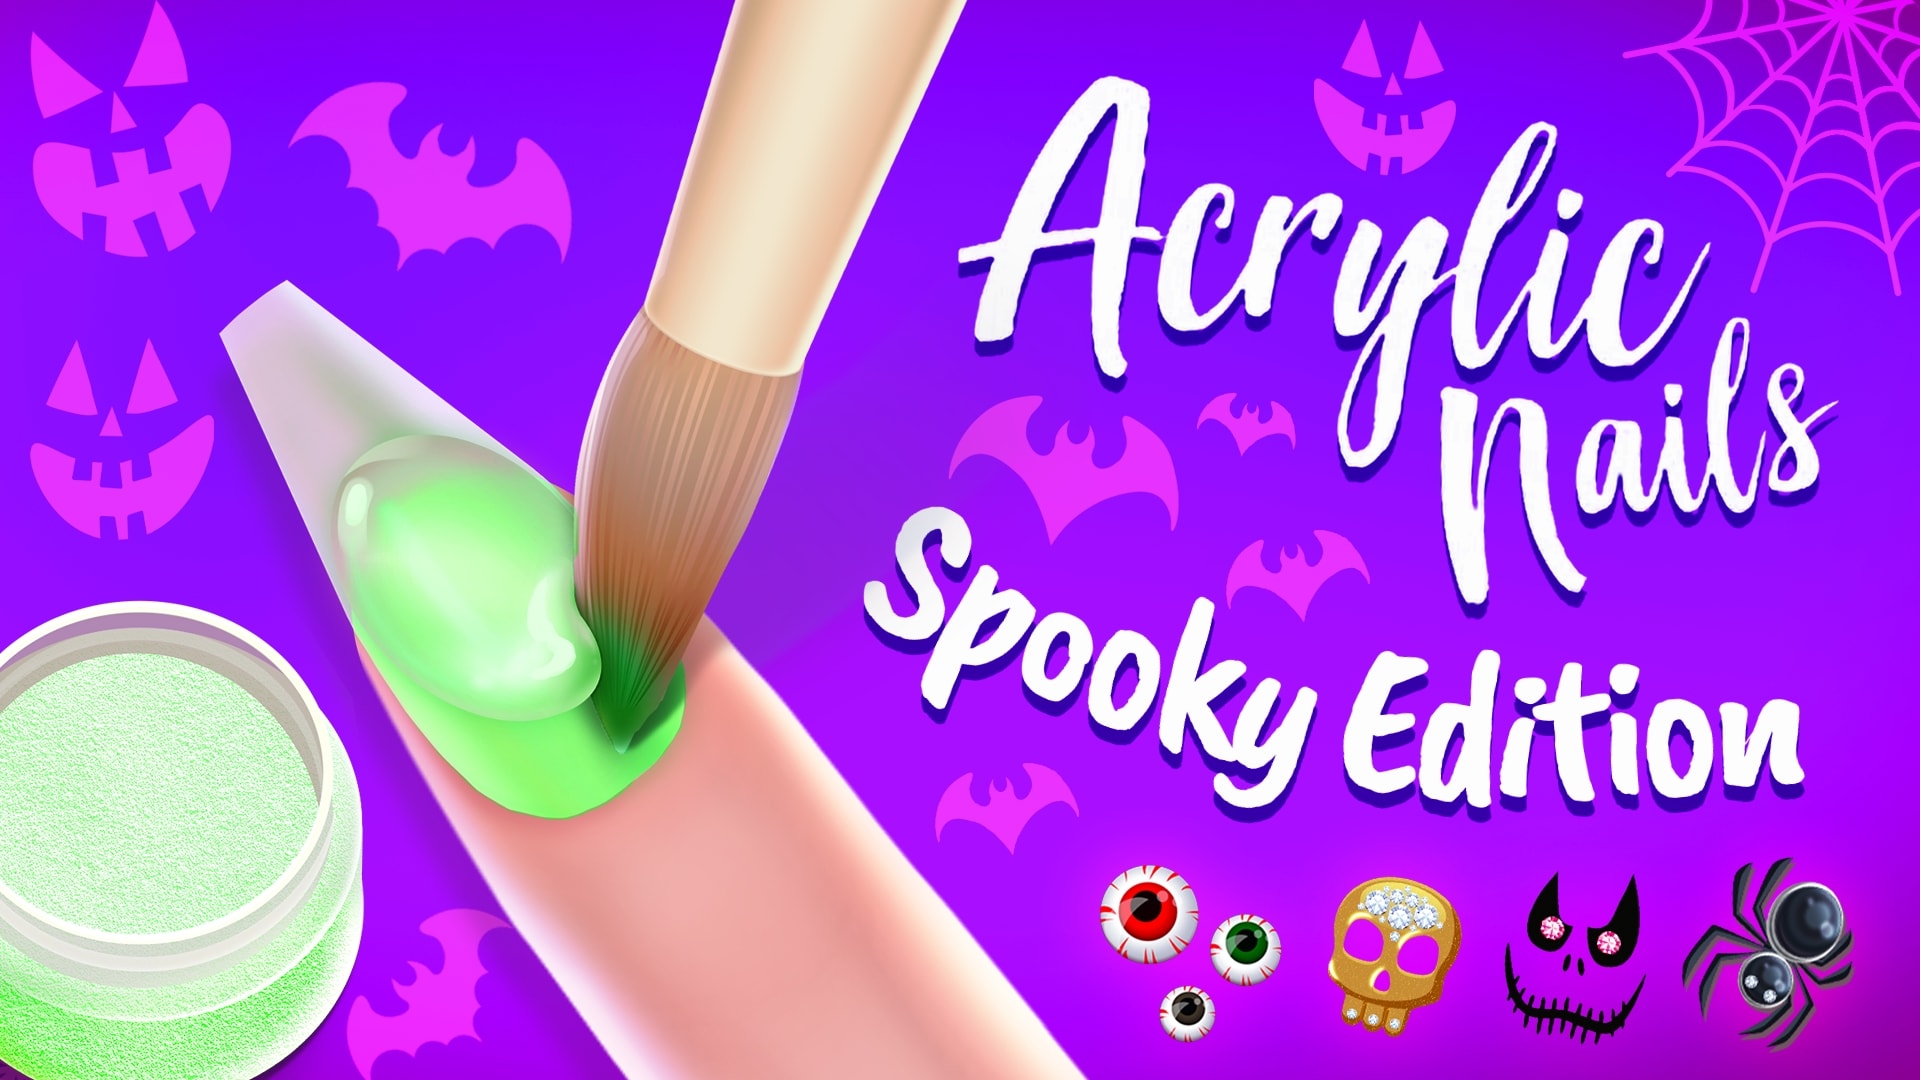 Acrylic Nails!: Spooky Edition 1